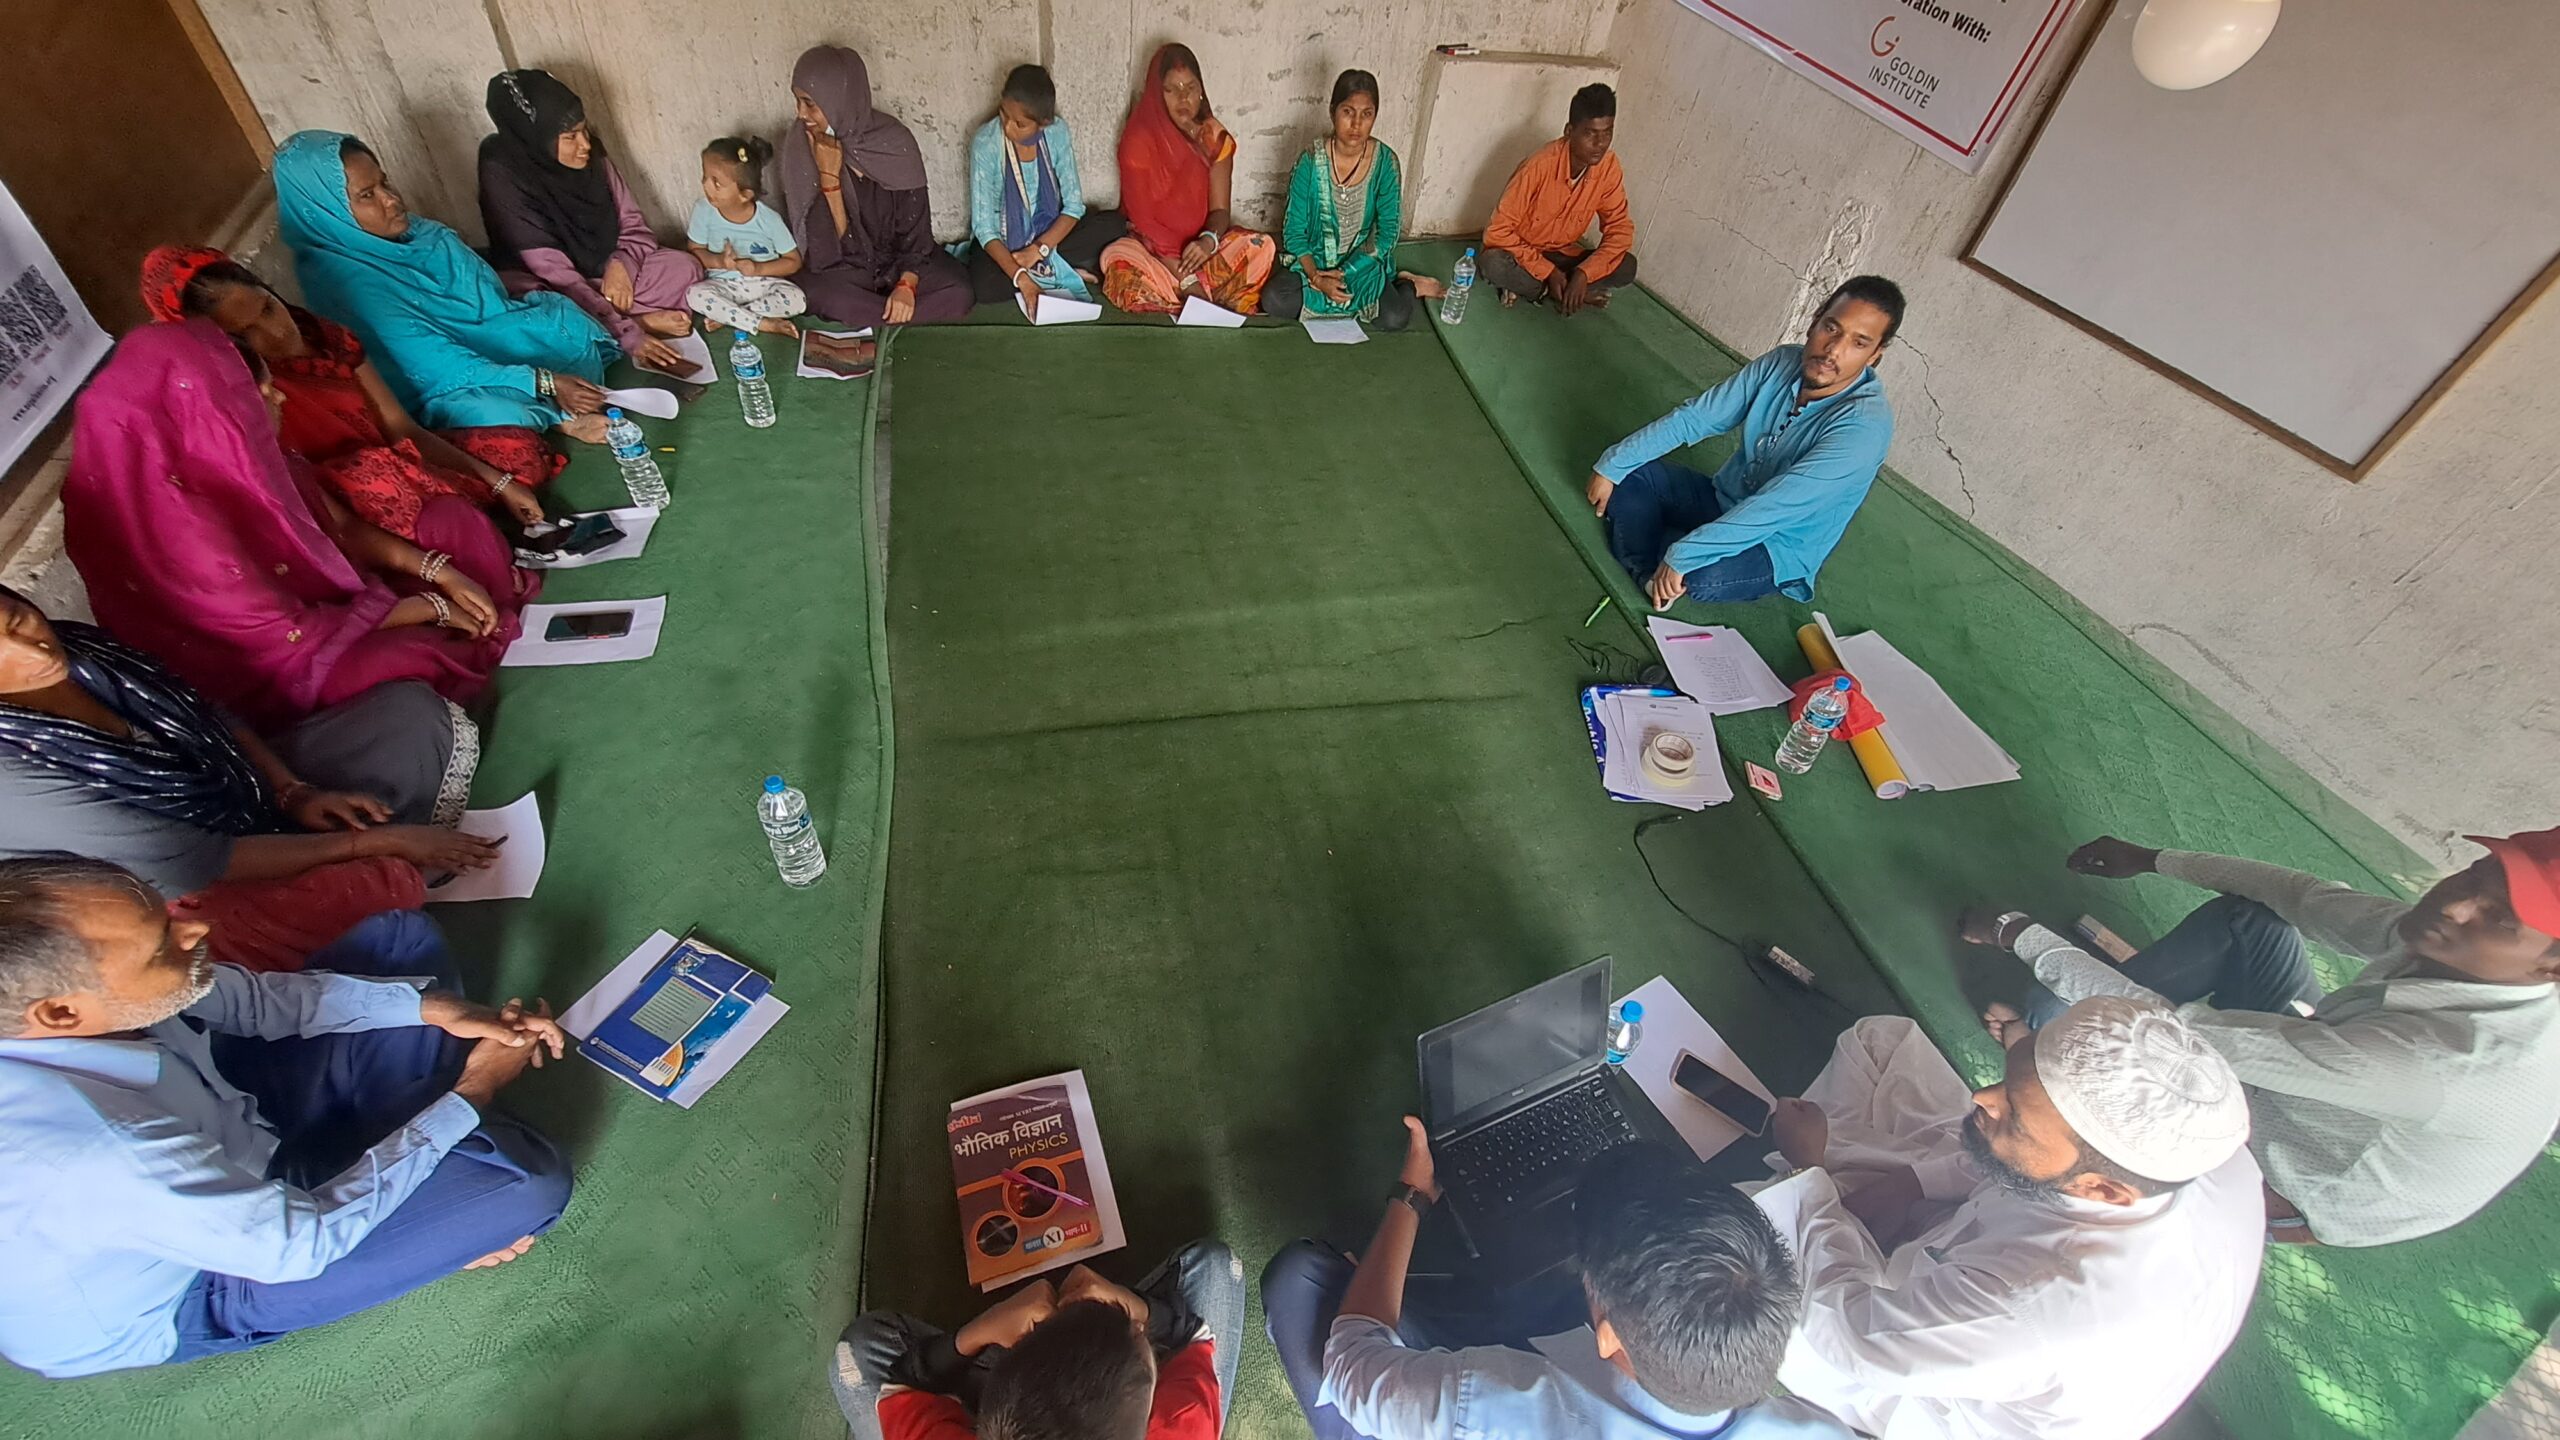 Community Visioning Summit in Rajbiraj